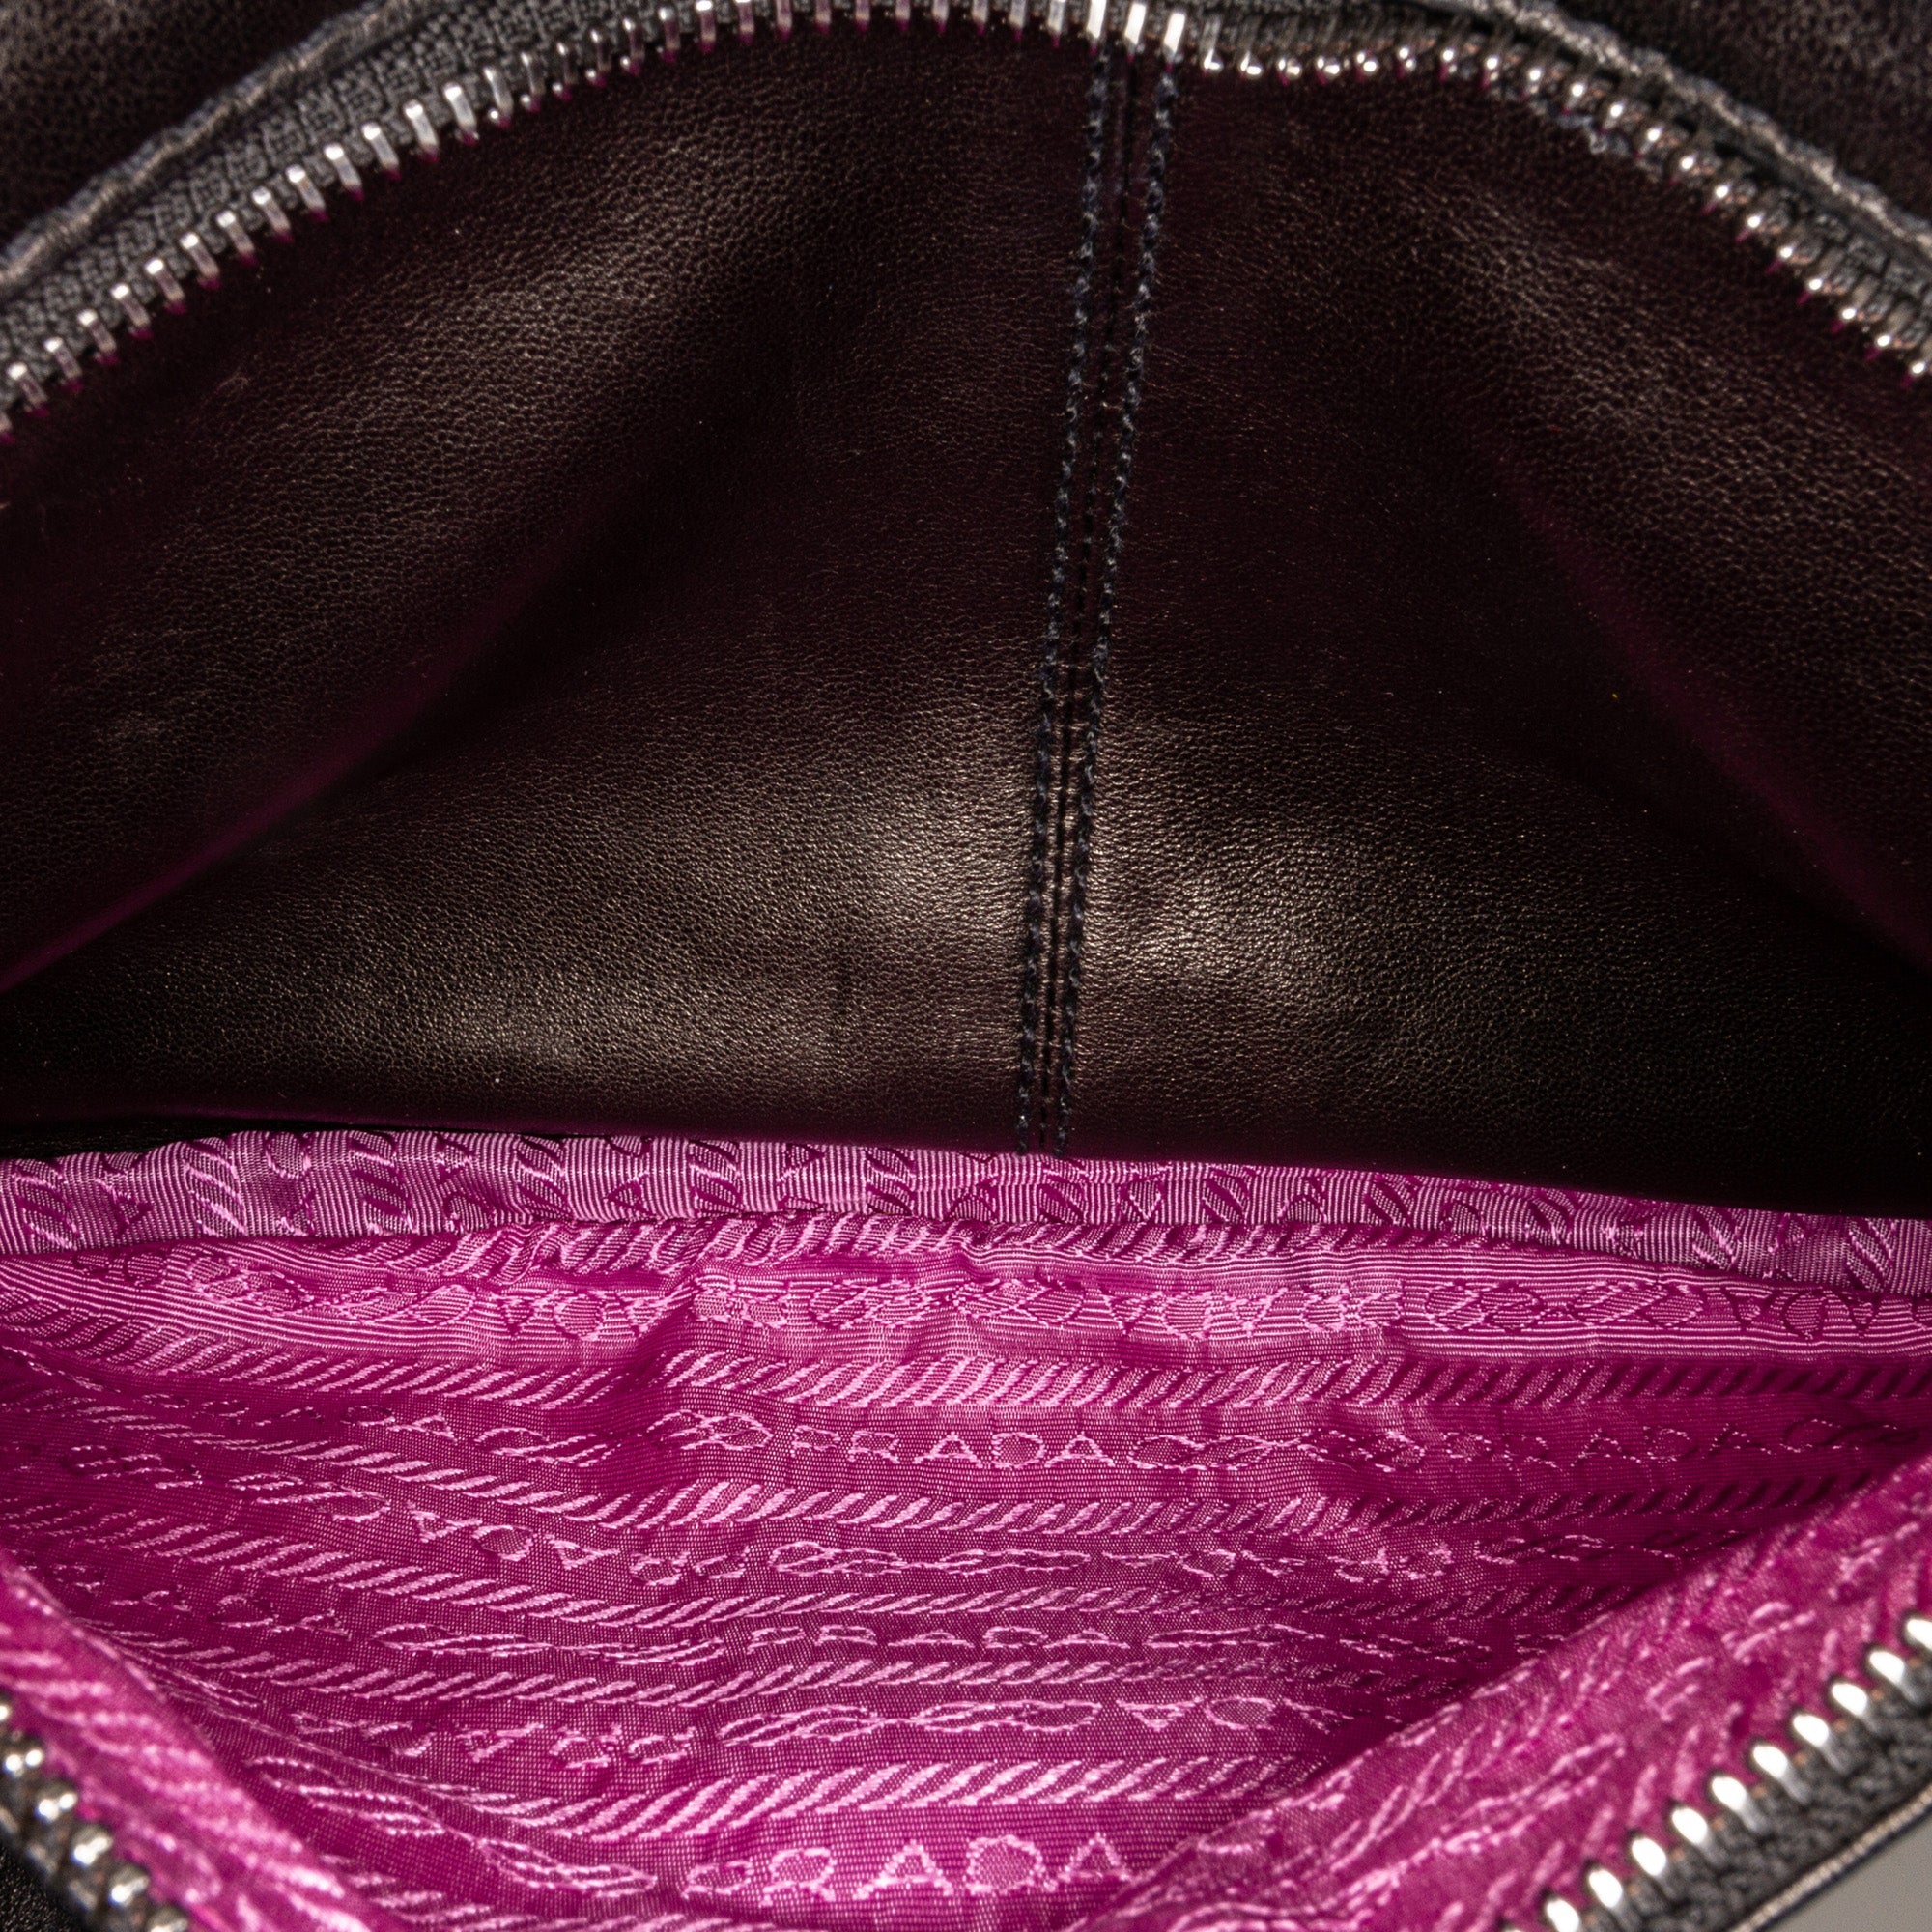 Saffiano Leather Portfolio in Black - Prada